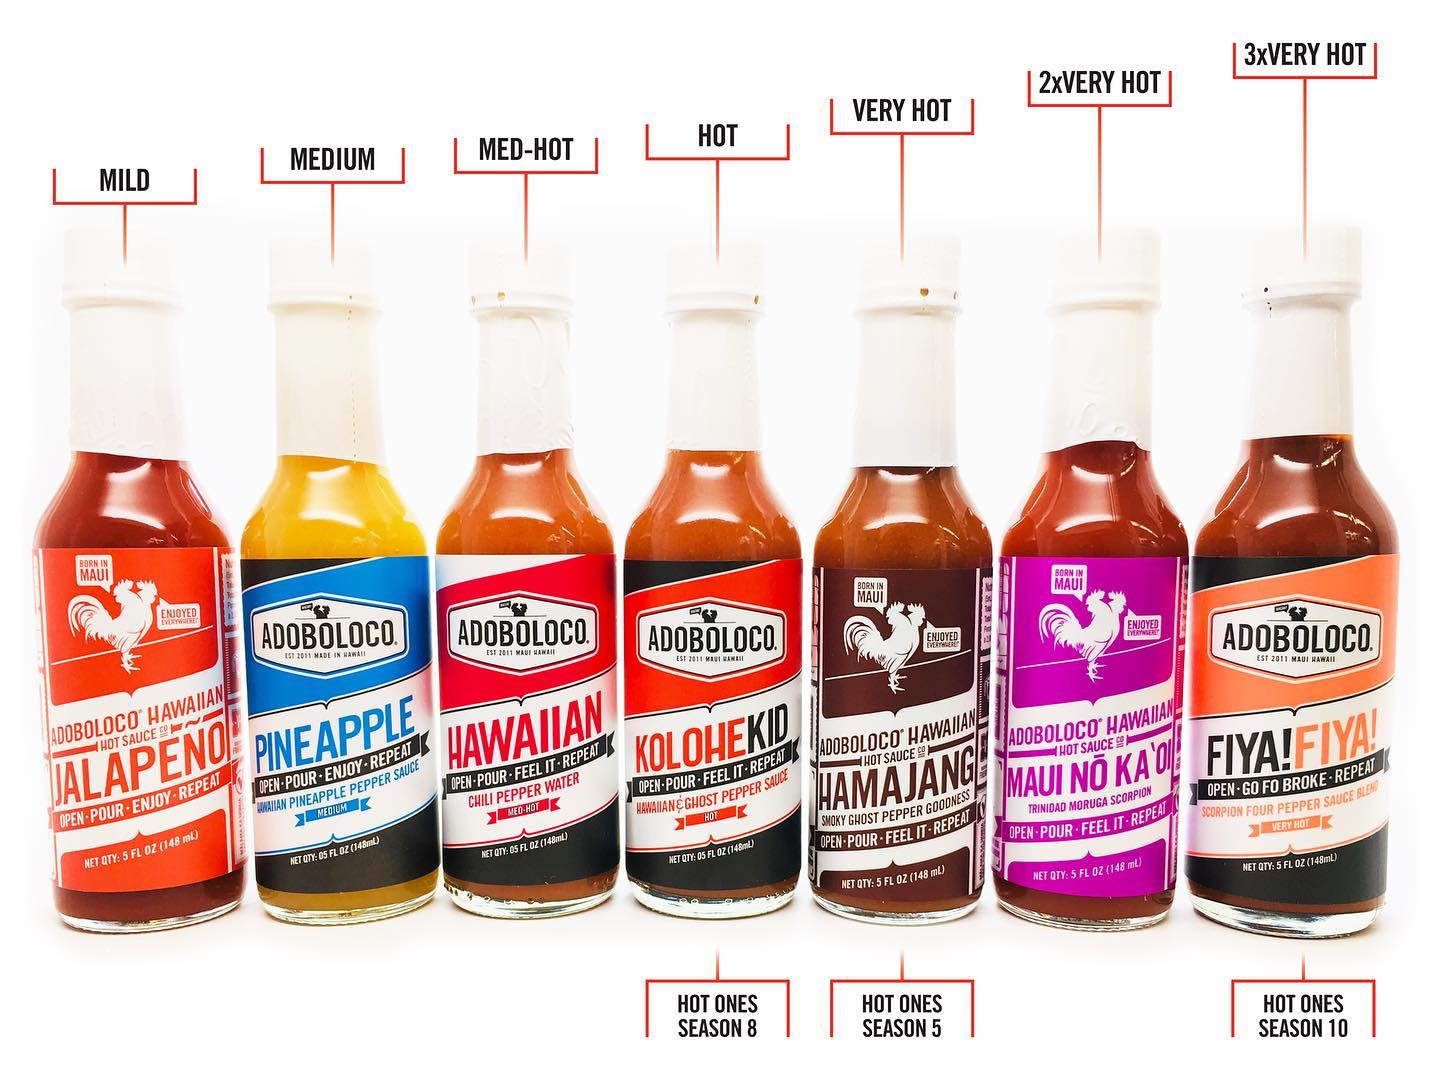 Honolulu Staff Picks Hawaii Favorites Adoboloco Hot Sauce Lineup